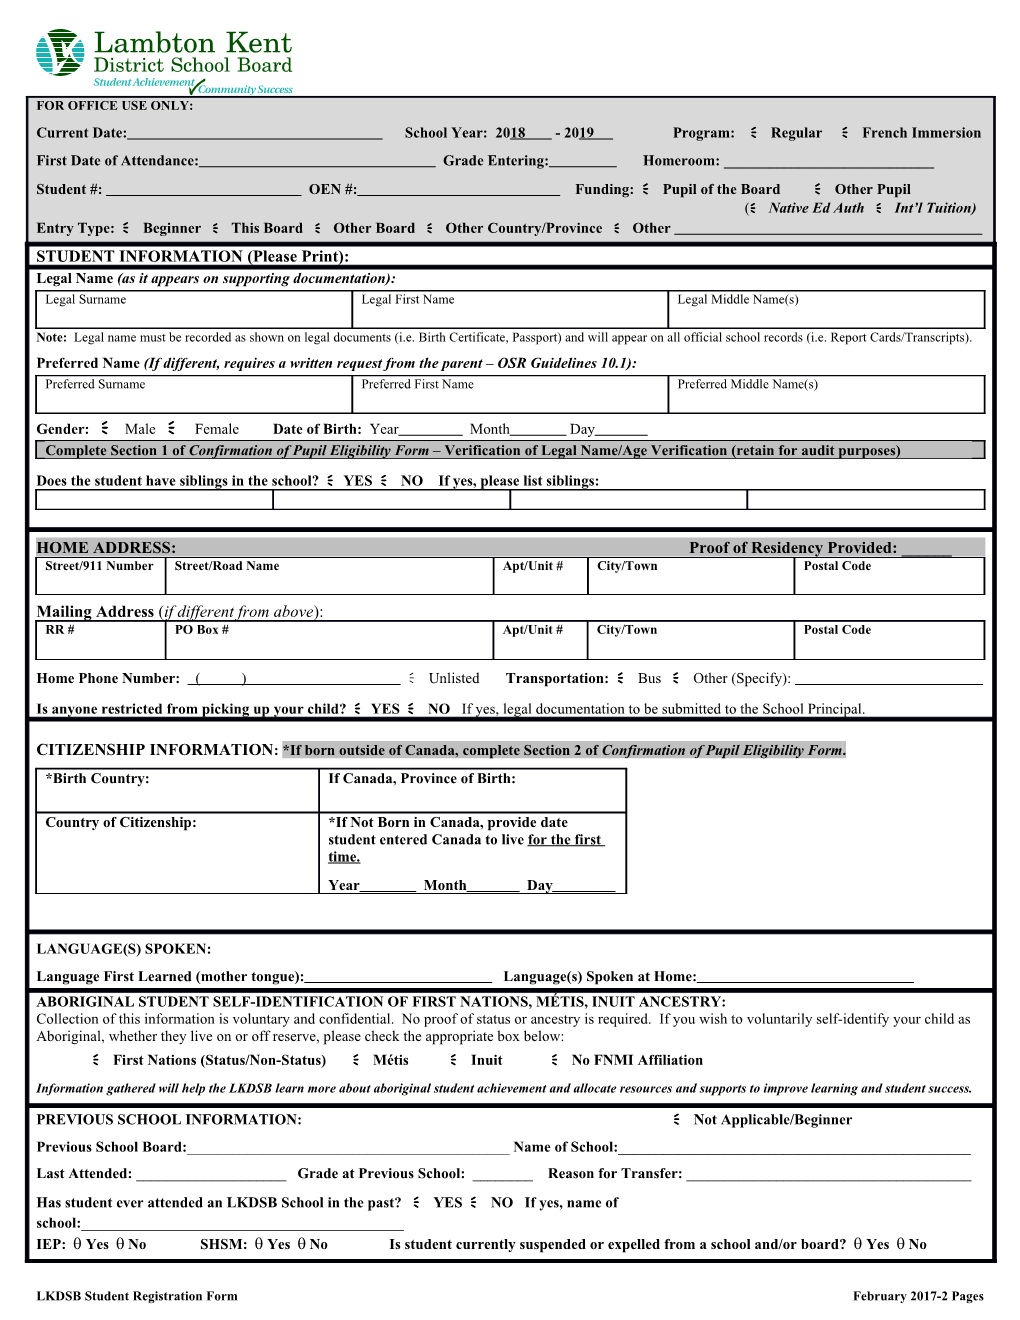 Student Registration Form Feb. 2017